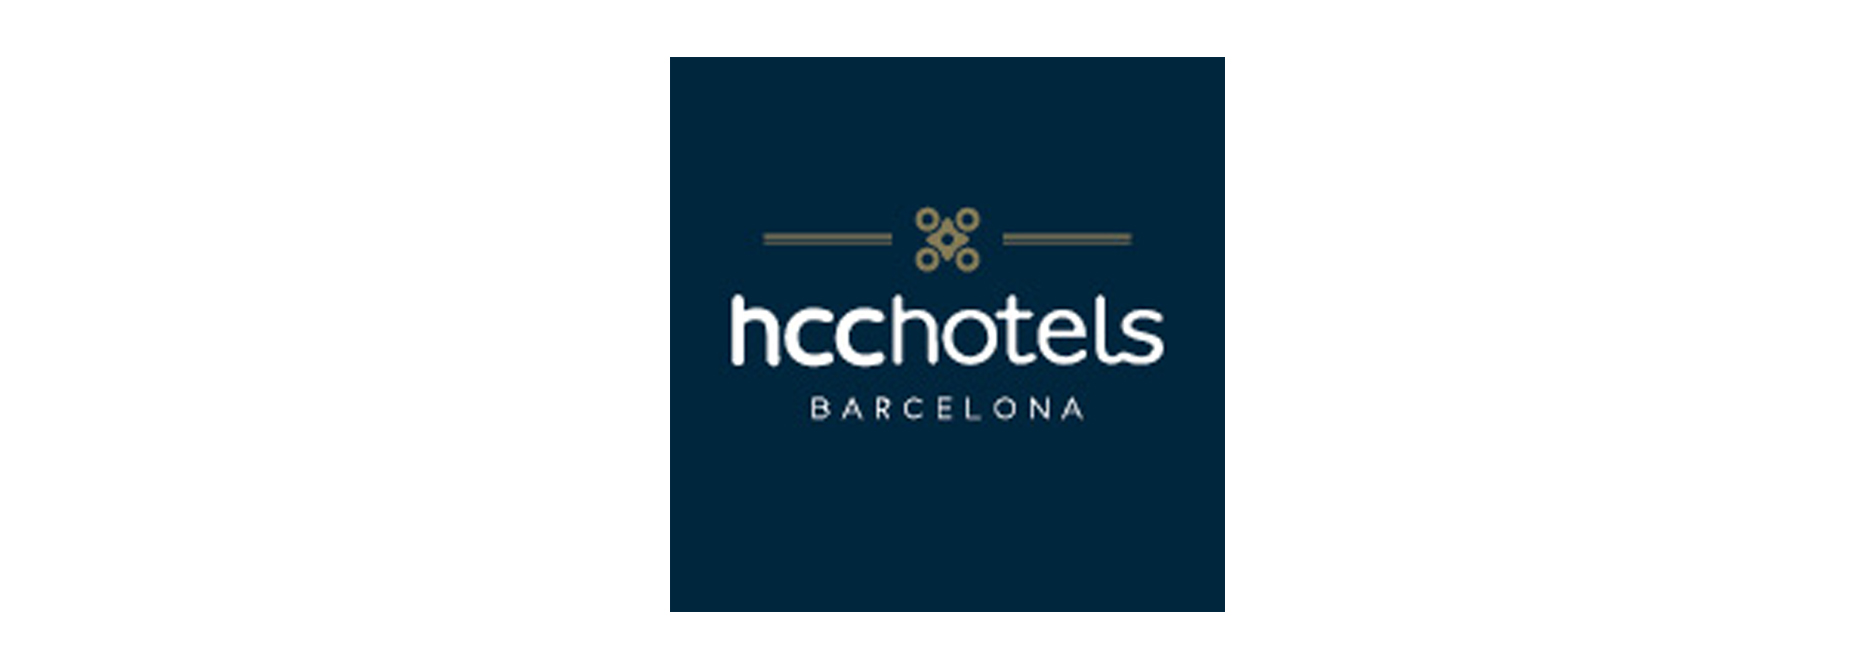 hcc hotels lp